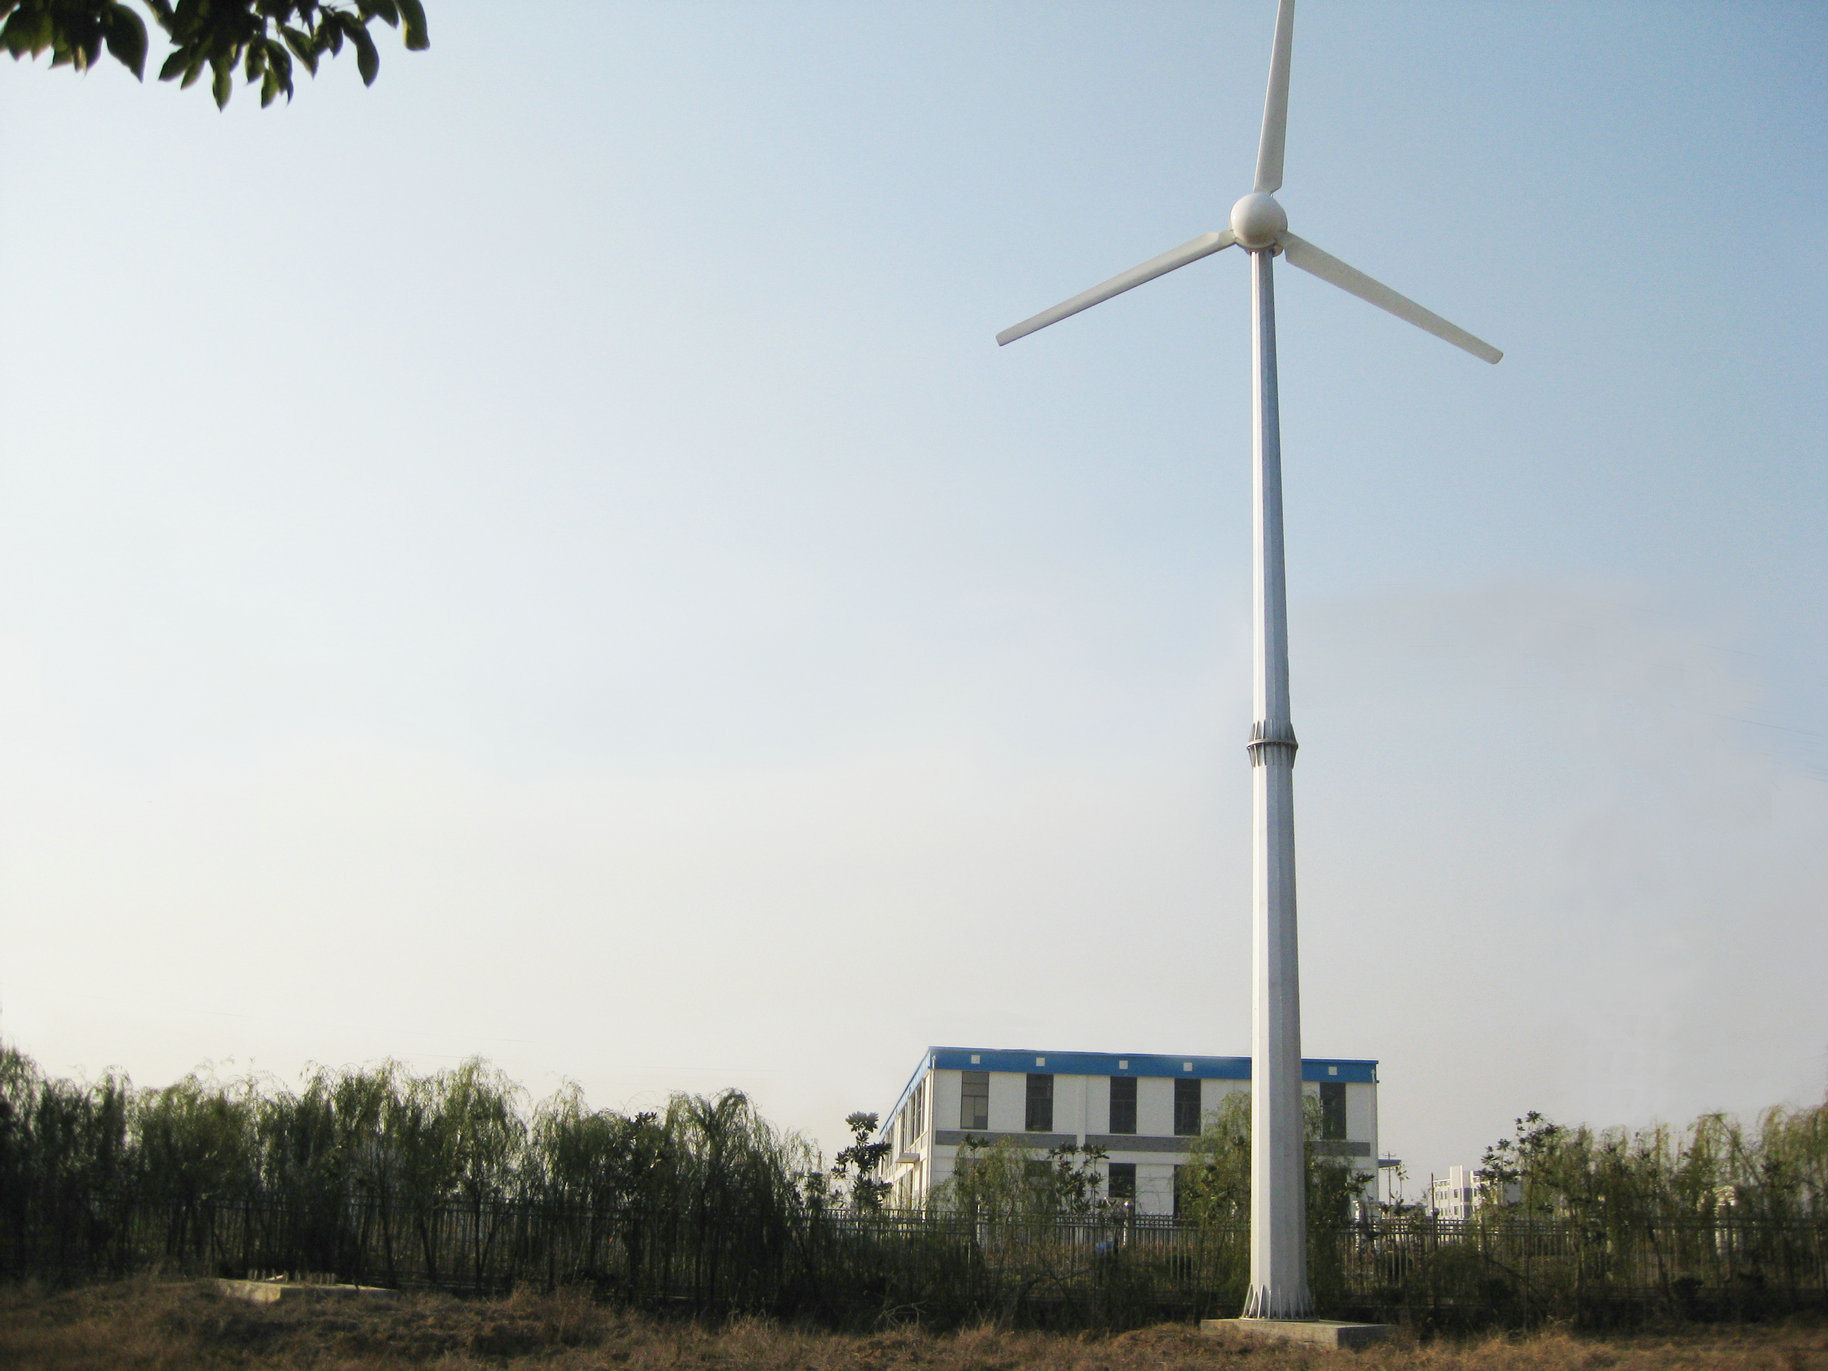 Small Wind Turbine Generator 30kw for Sale